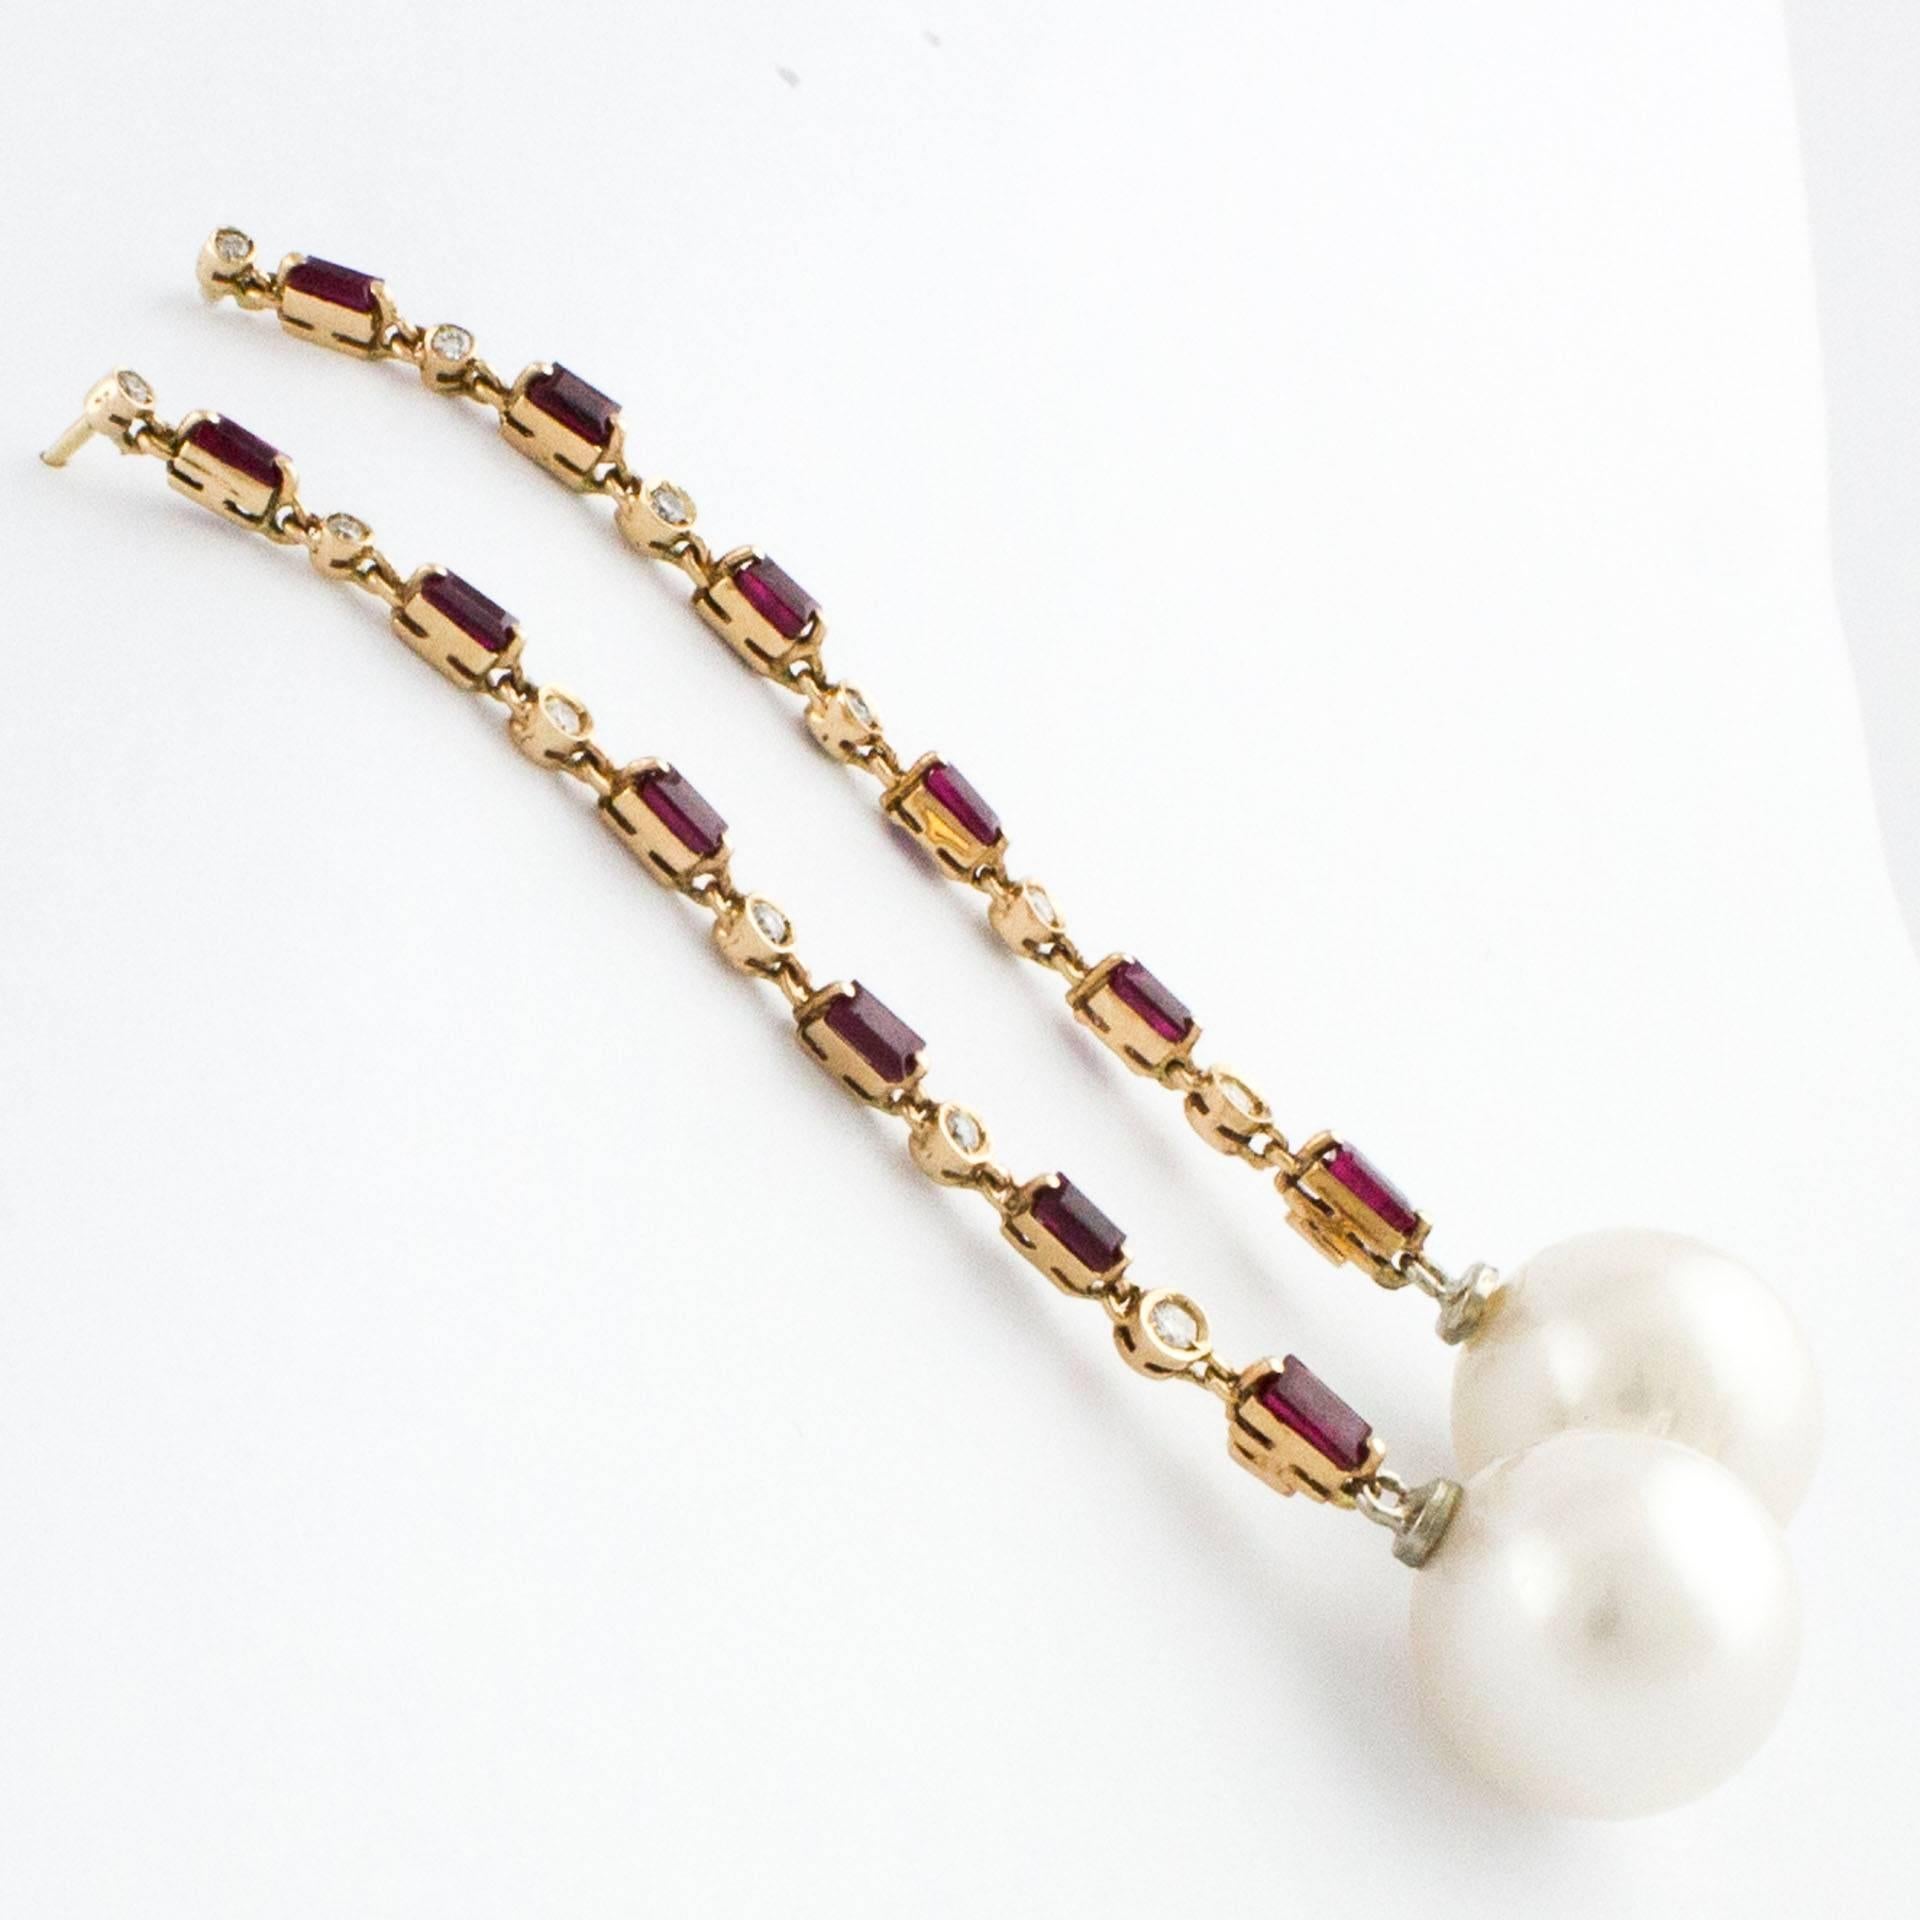 Retro Dangle Rose Gold Earrings with Diamonds, Rubies and Australian Pearls